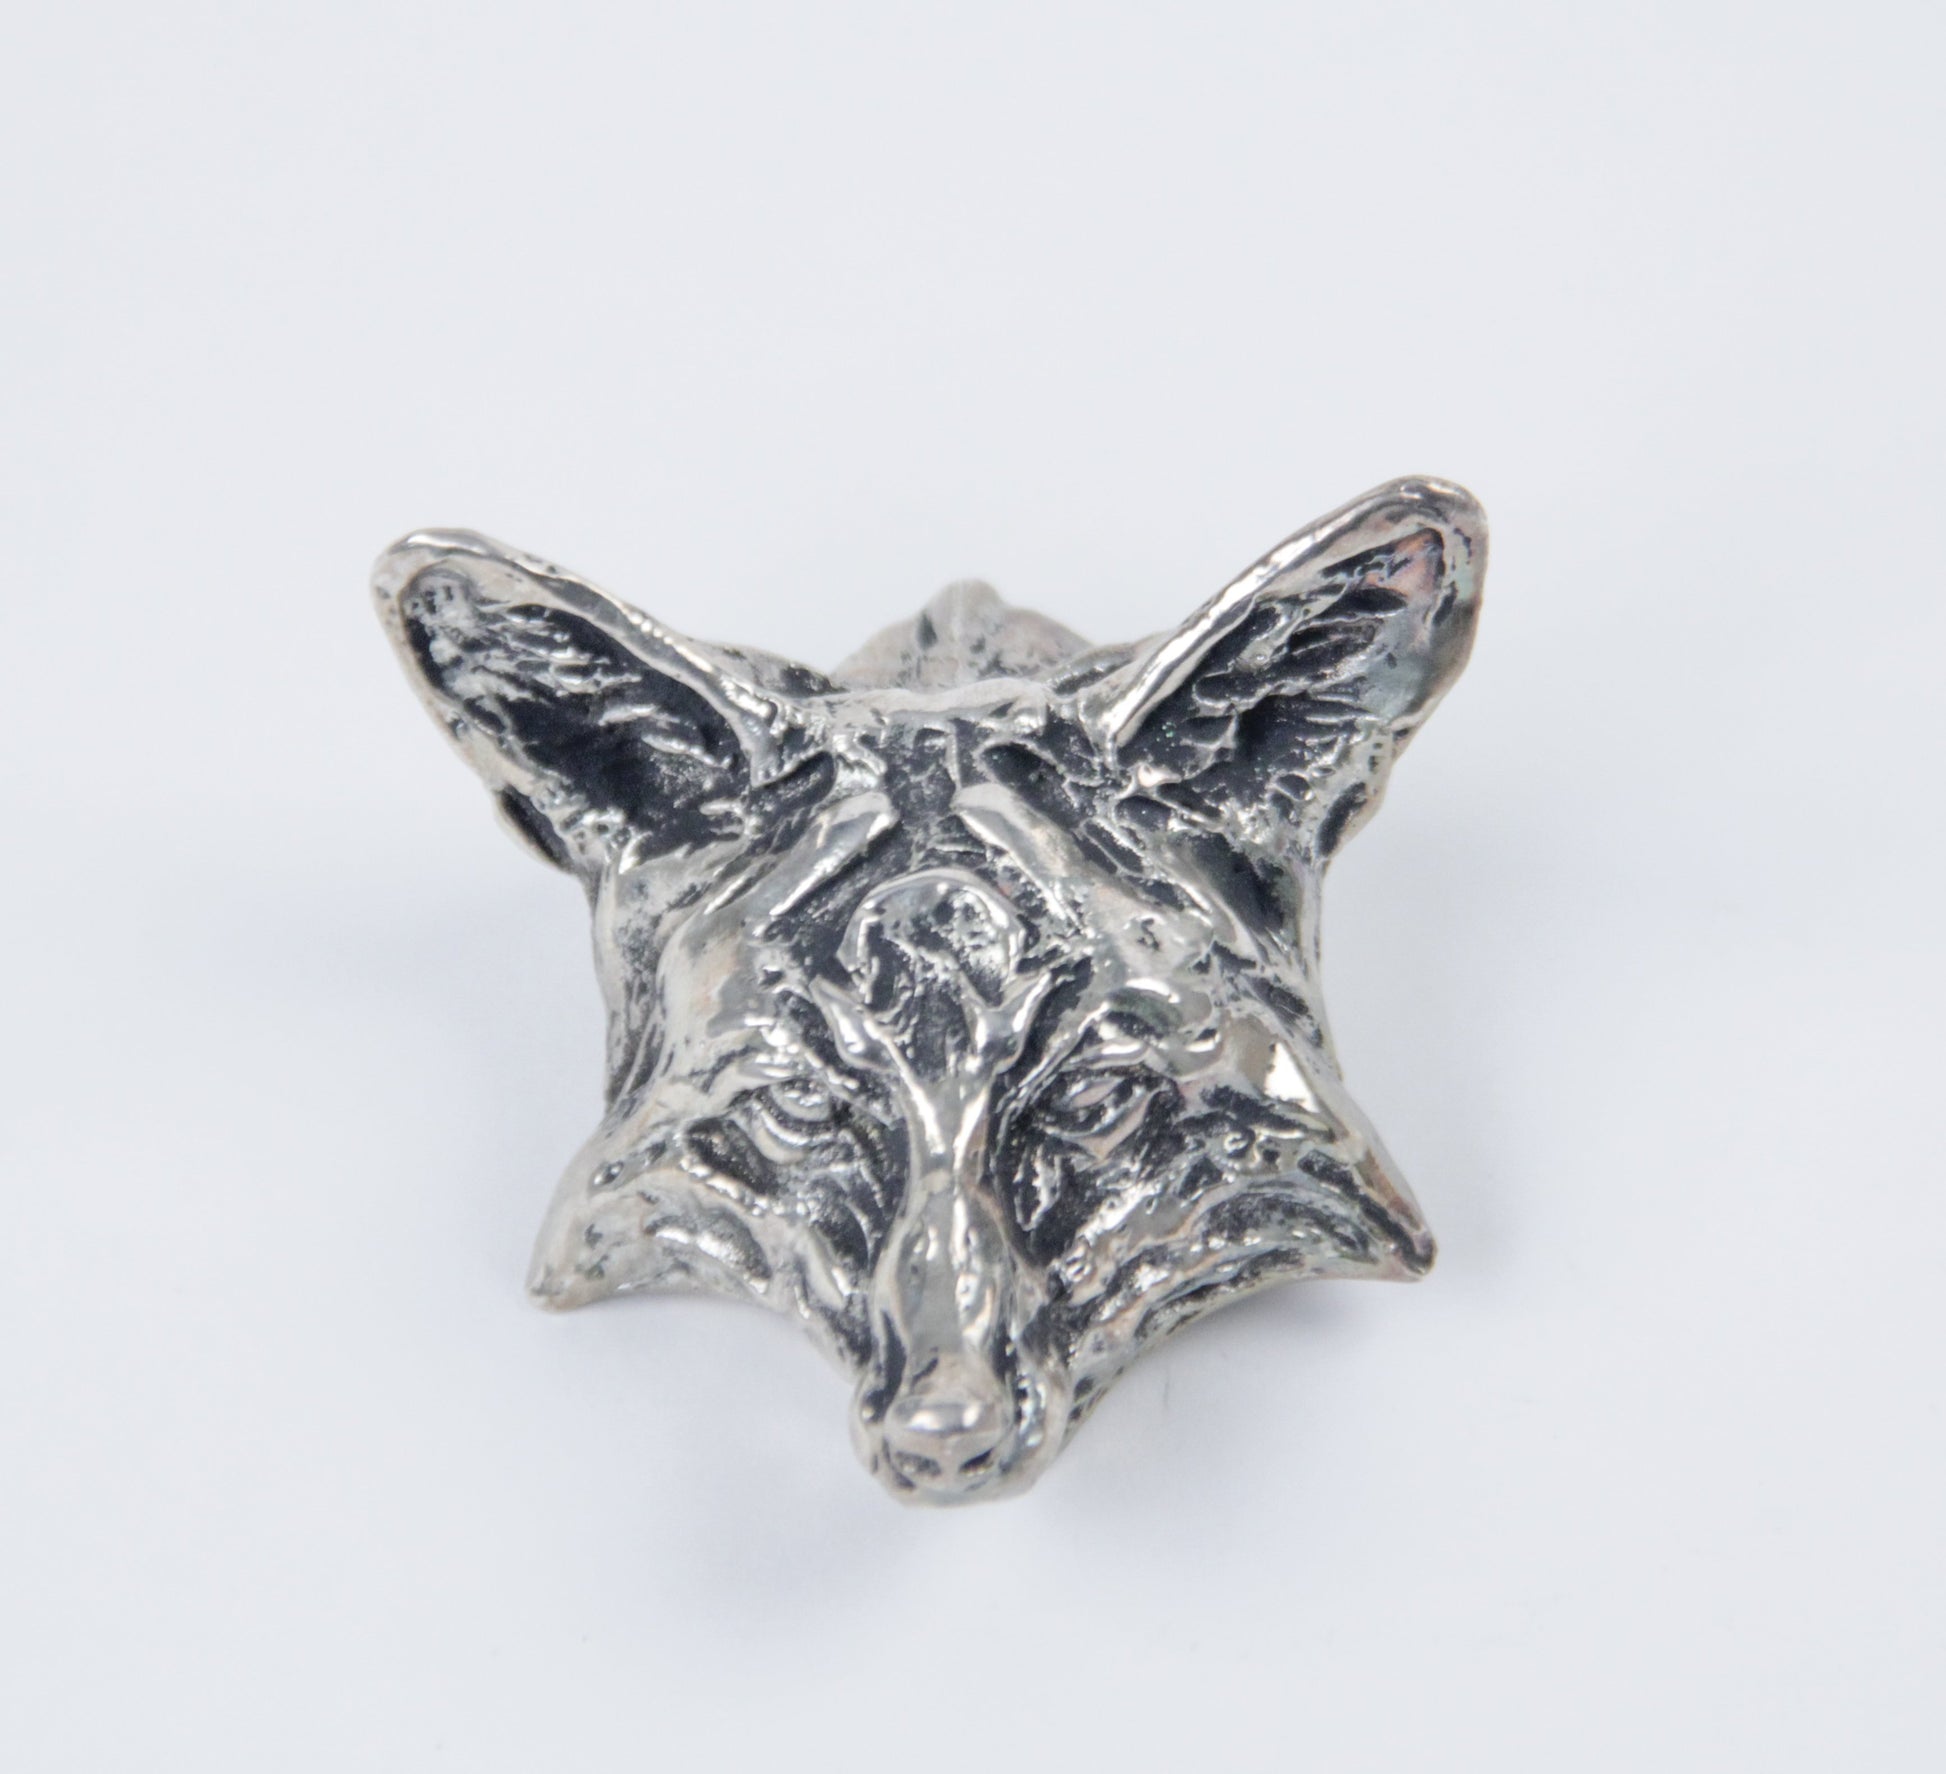 2010 Prix de West collector's bolo red fox by richard loffler silver